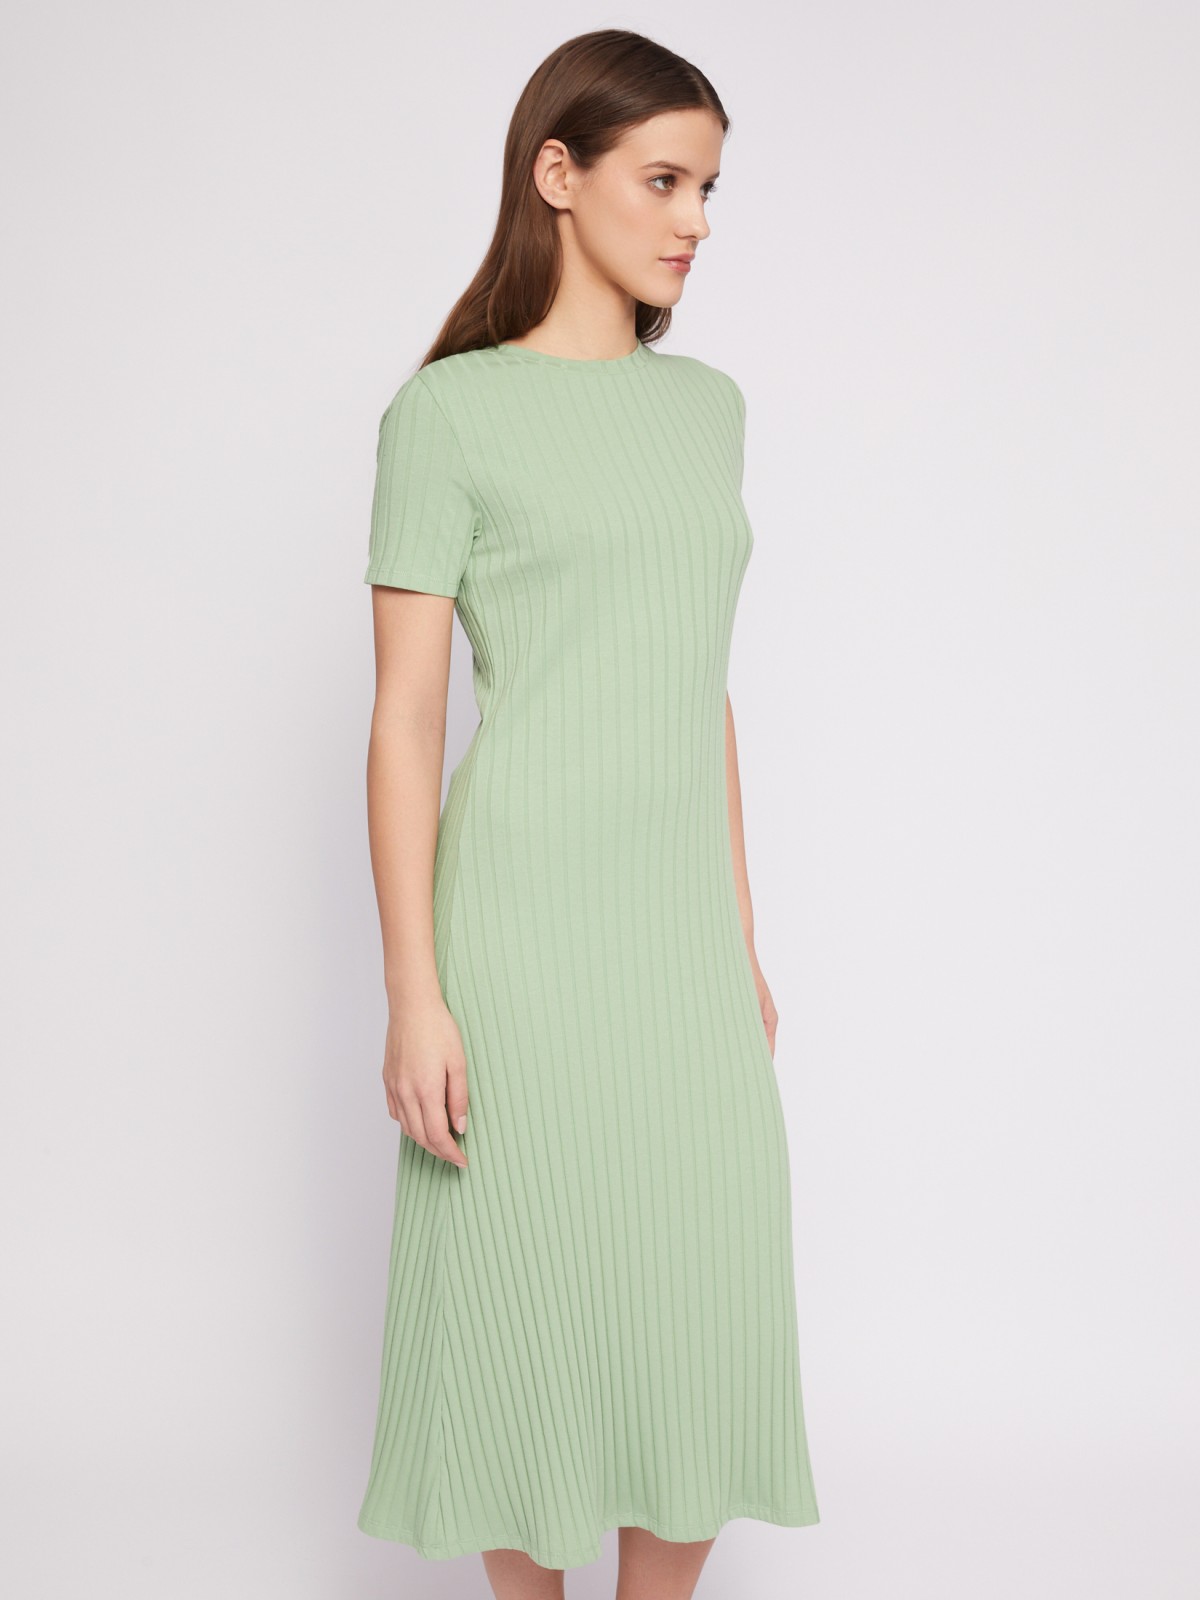 Платье-футболка миди с коротким рукавом zolla N24218139133, цвет светло-зеленый, размер XS - фото 2